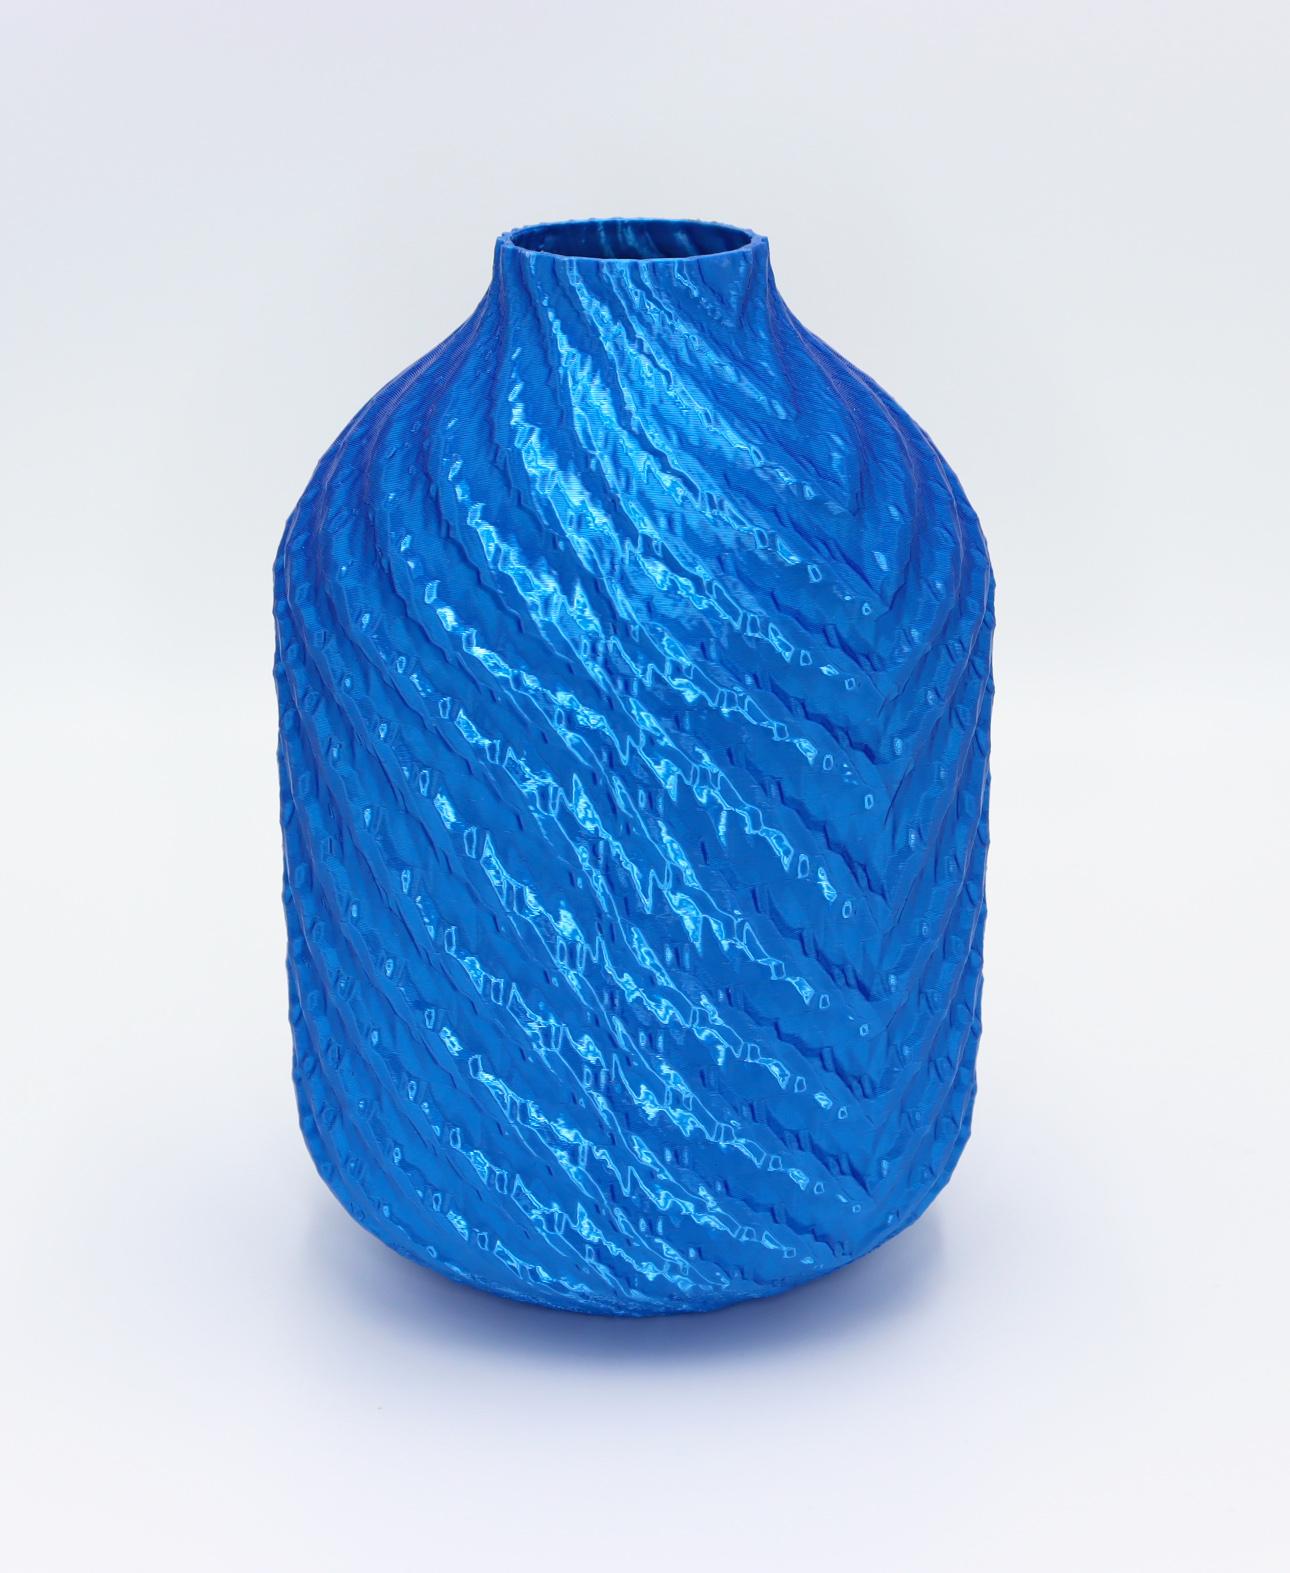 Vase pack 003 3d model